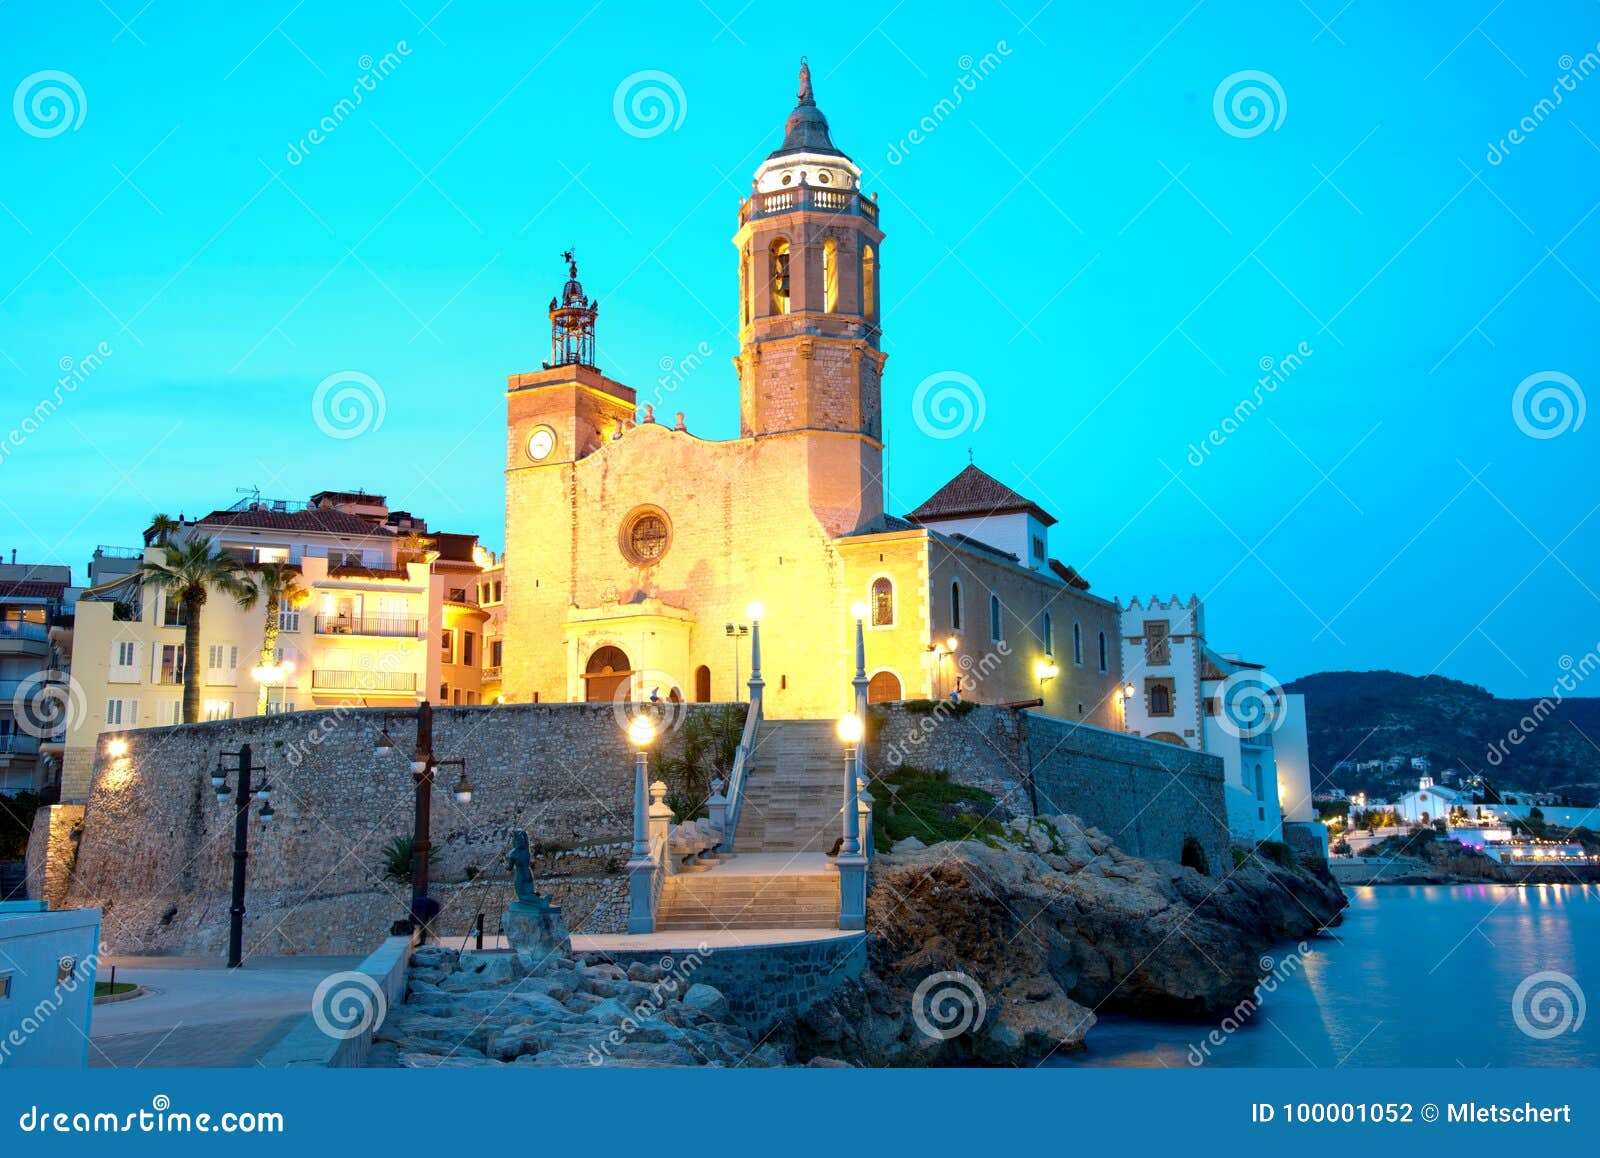 church of sant bertomeu and santa tecla in sitges by night .costa brava, spain.